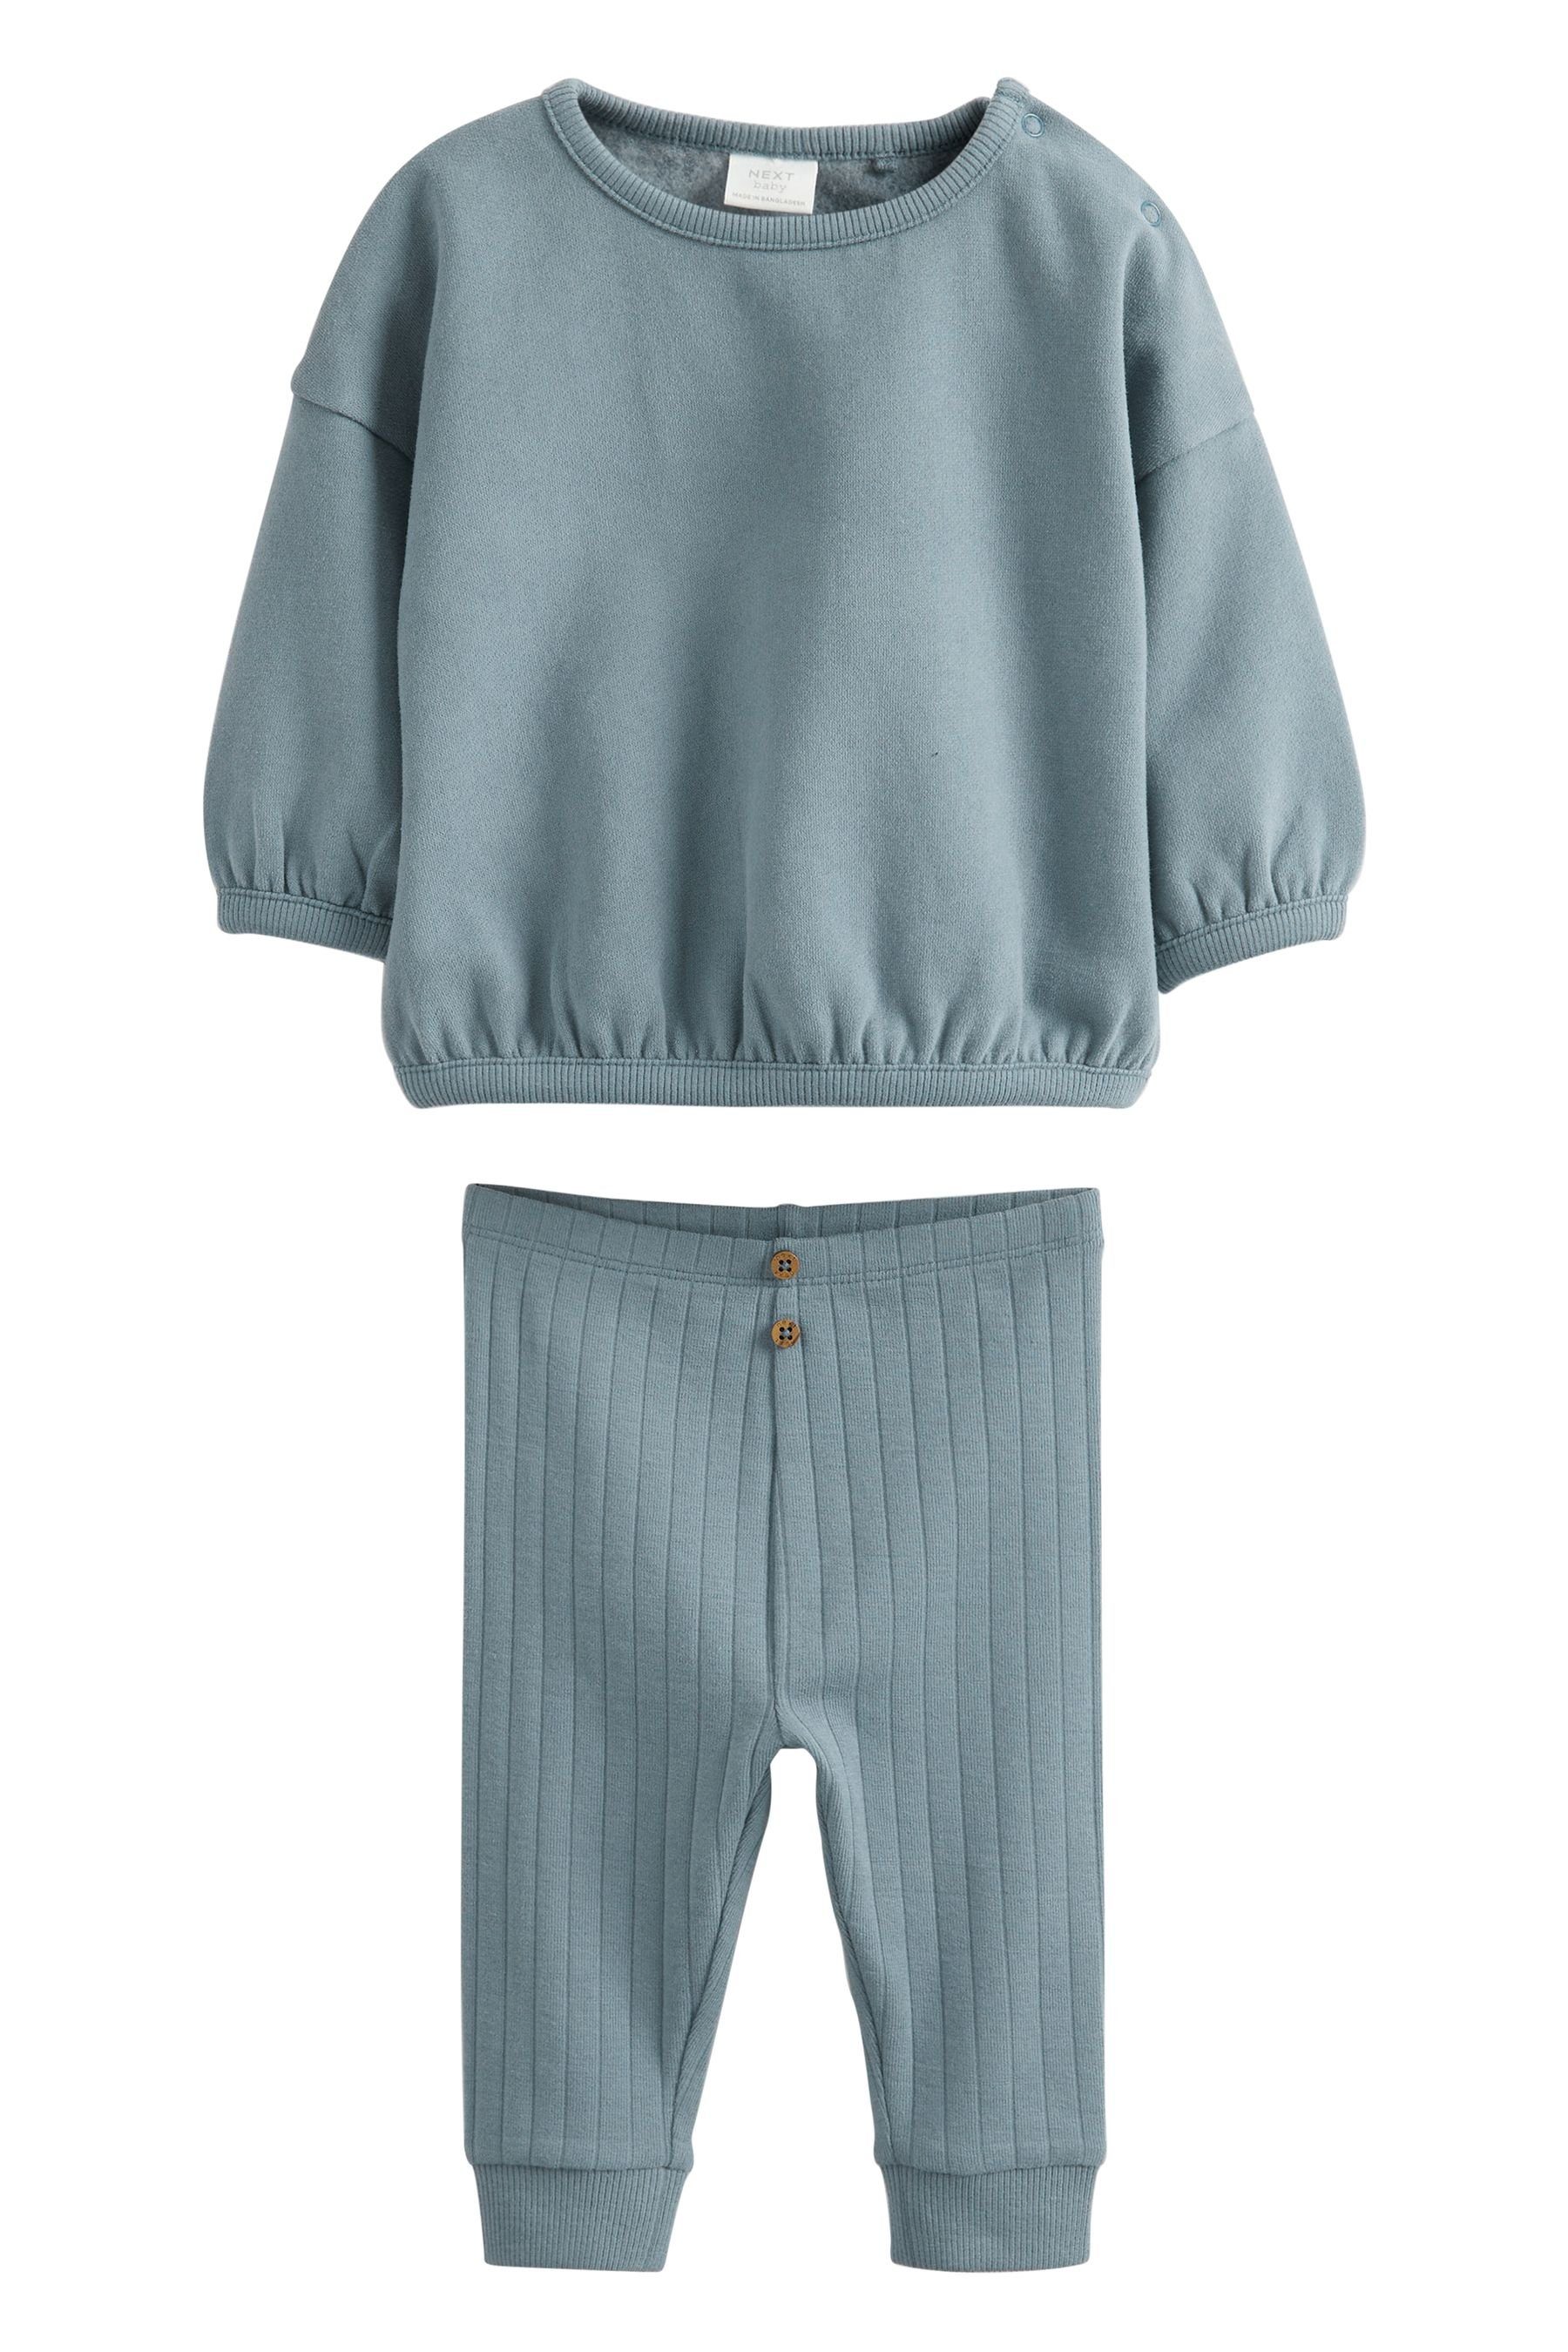 Next Shirt & Leggings 2-teiliges Baby-Set mit Sweatshirt und Leggings (2-tlg) Teal Blue